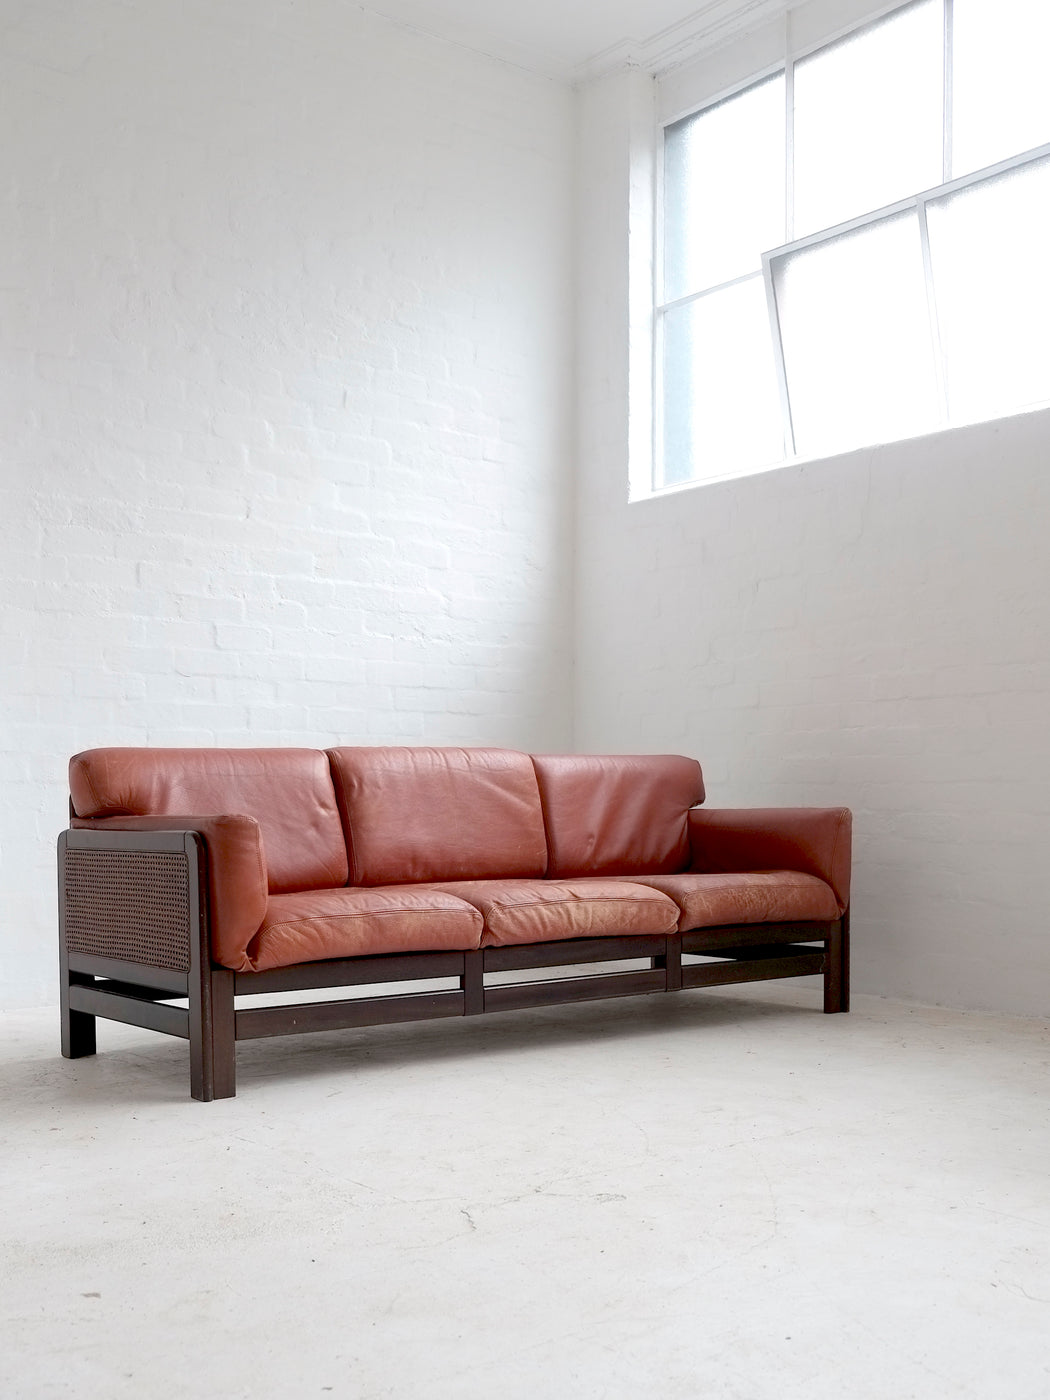 Danish Cane and Leather Sofa